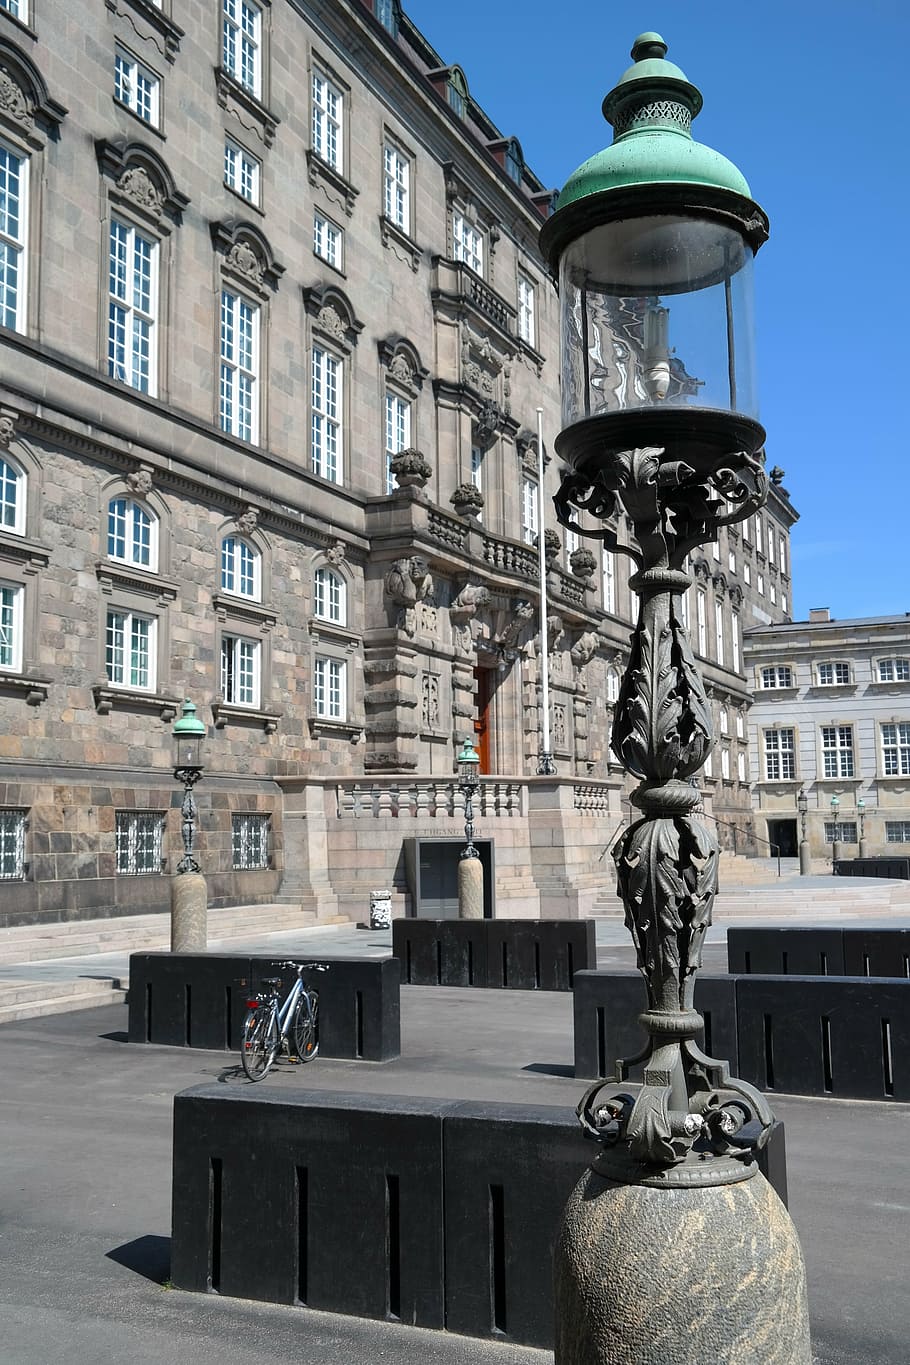 government, copenhagen, lamp, day, old, christiansborg, city, building, denmark, architecture